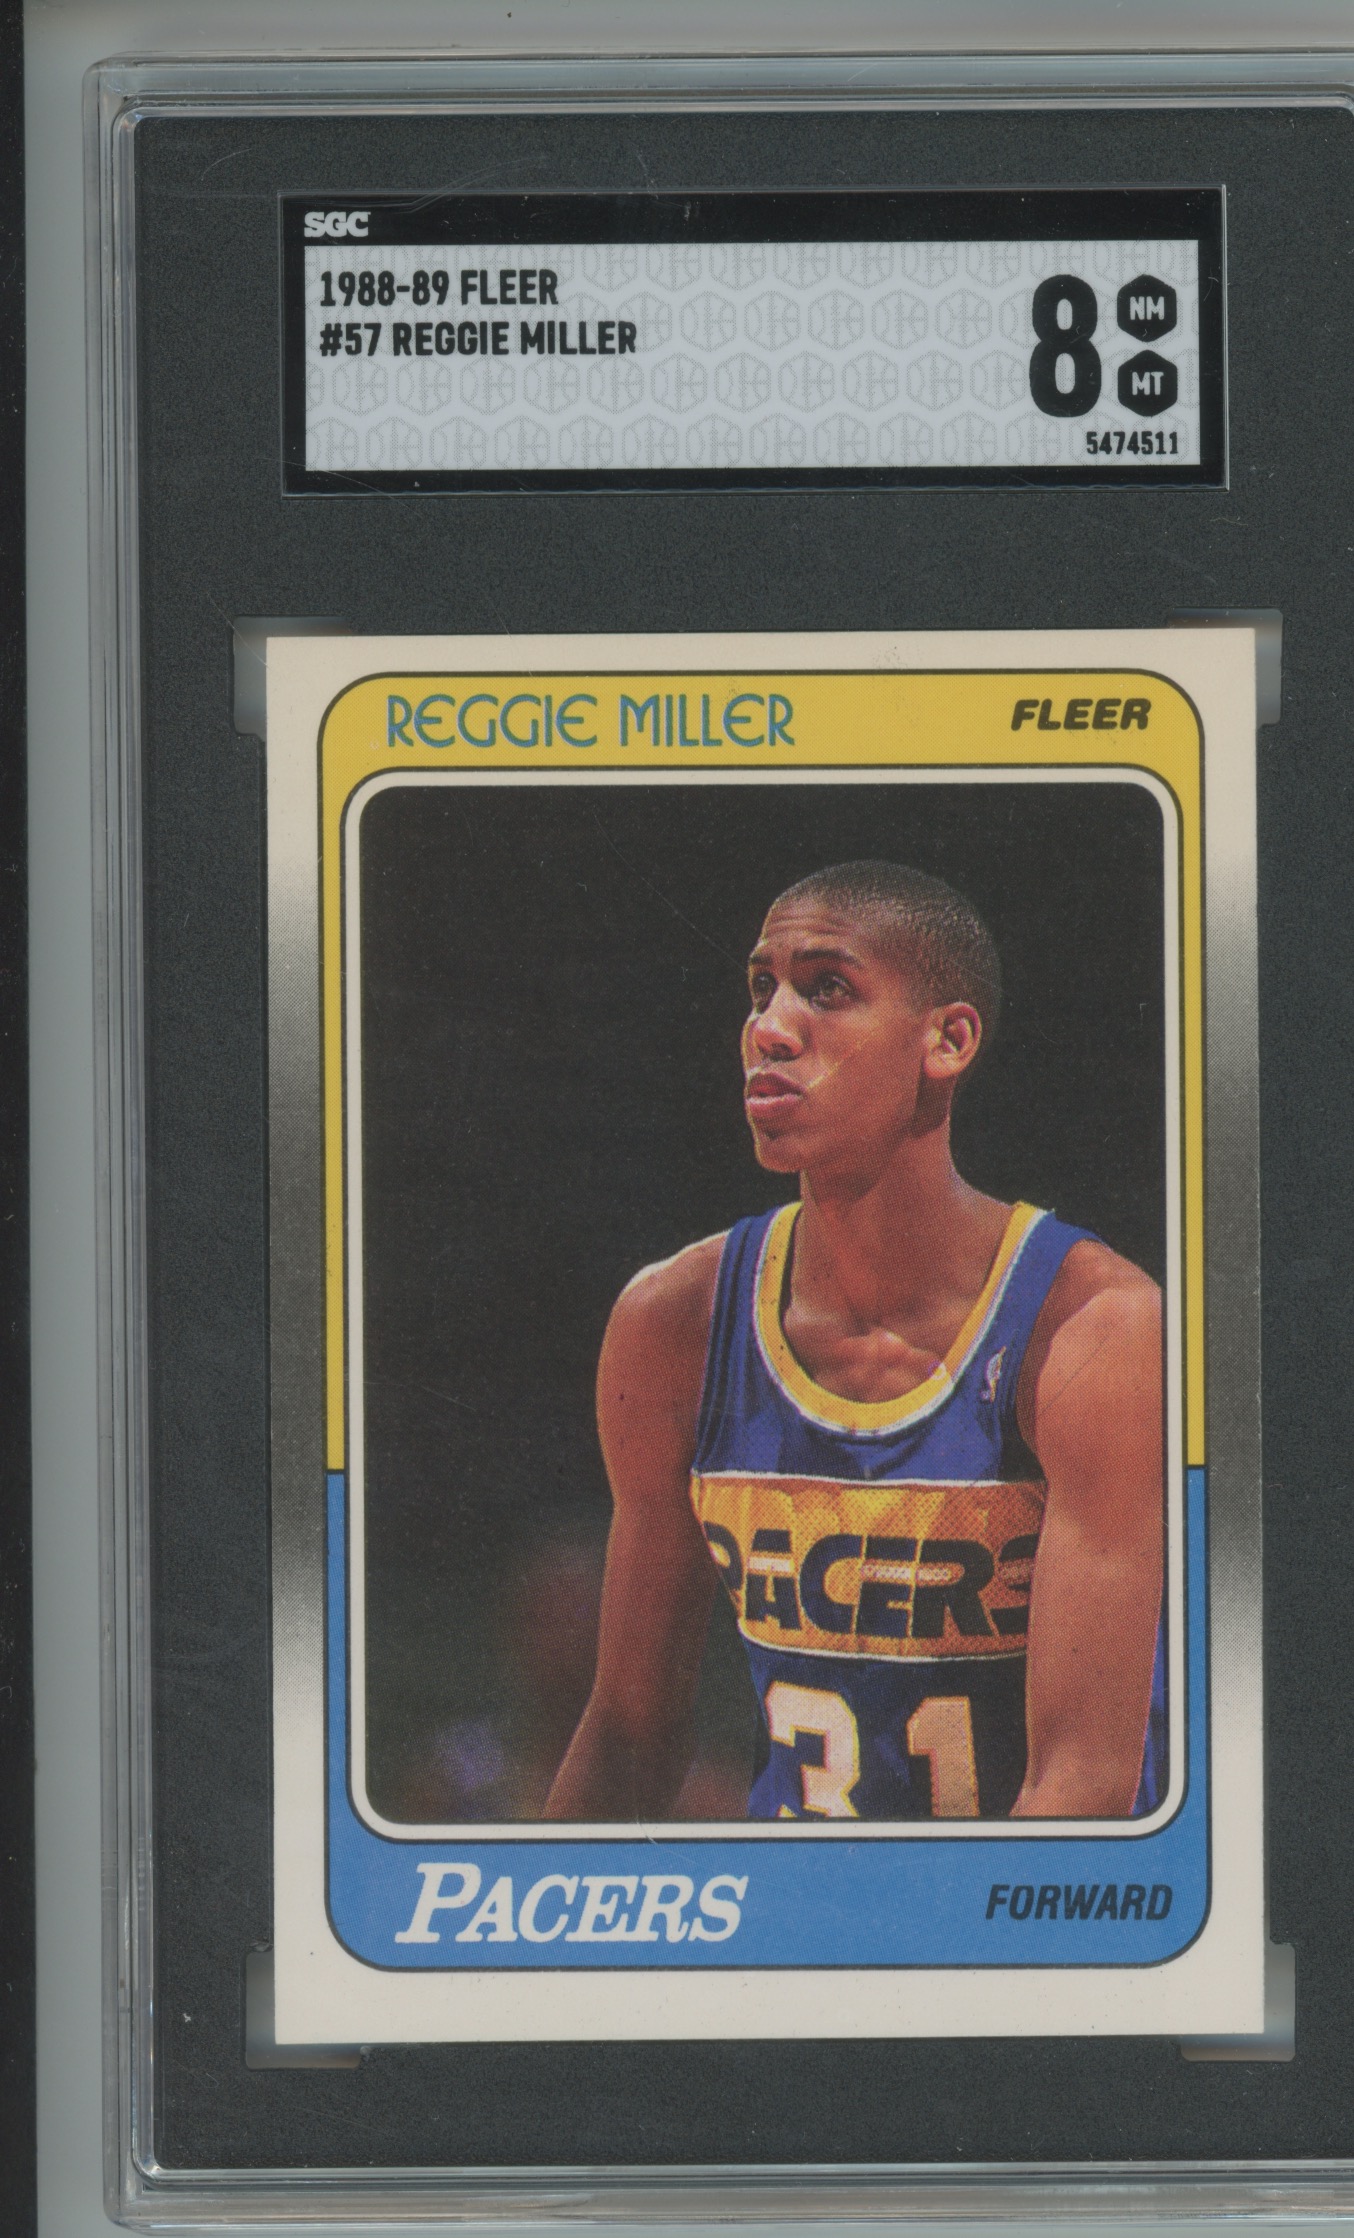 1988-89 FLEER BASKETBALL #57 REGGIE MILLER INDIANA PACERS NBA ROOKIE CARD  GRADED SGC 8 – The Felt Fanatic